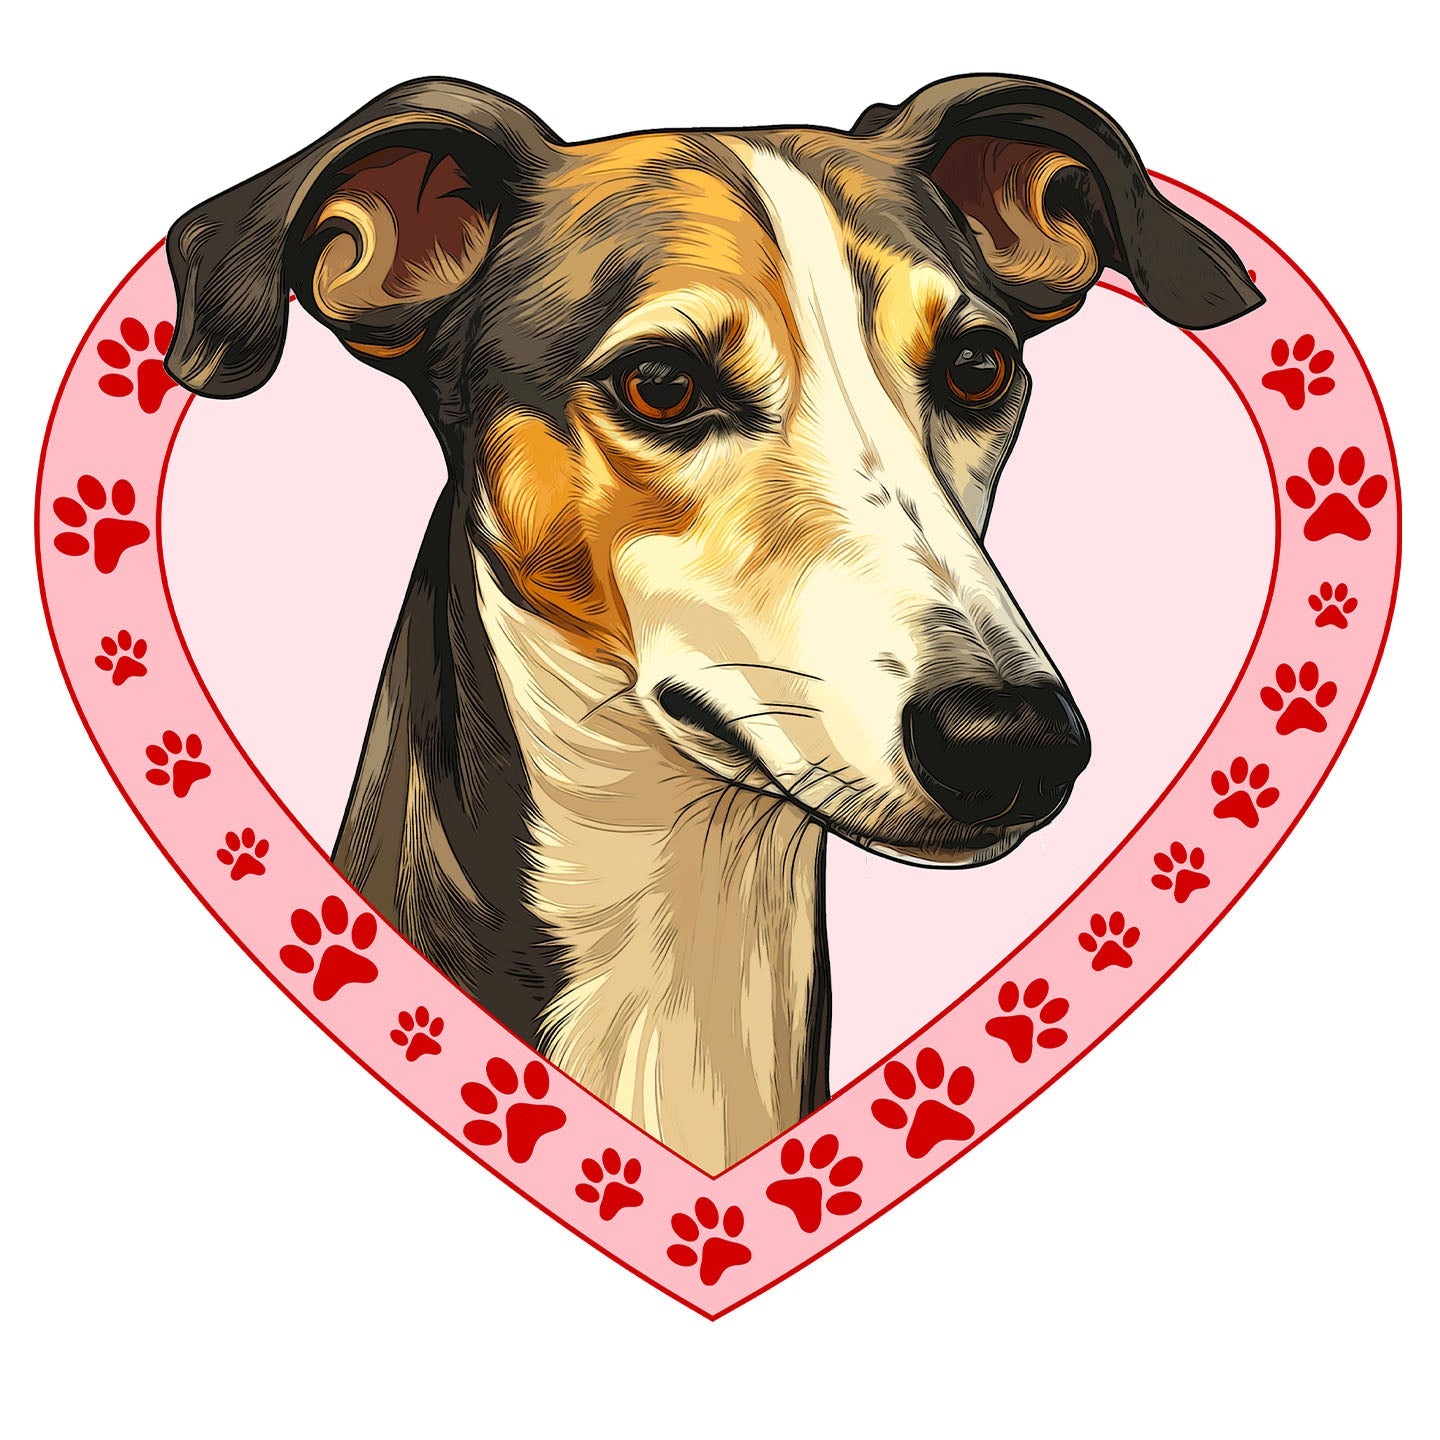 Greyhound (Light Brindle) Illustration In Heart - Adult Unisex T-Shirt